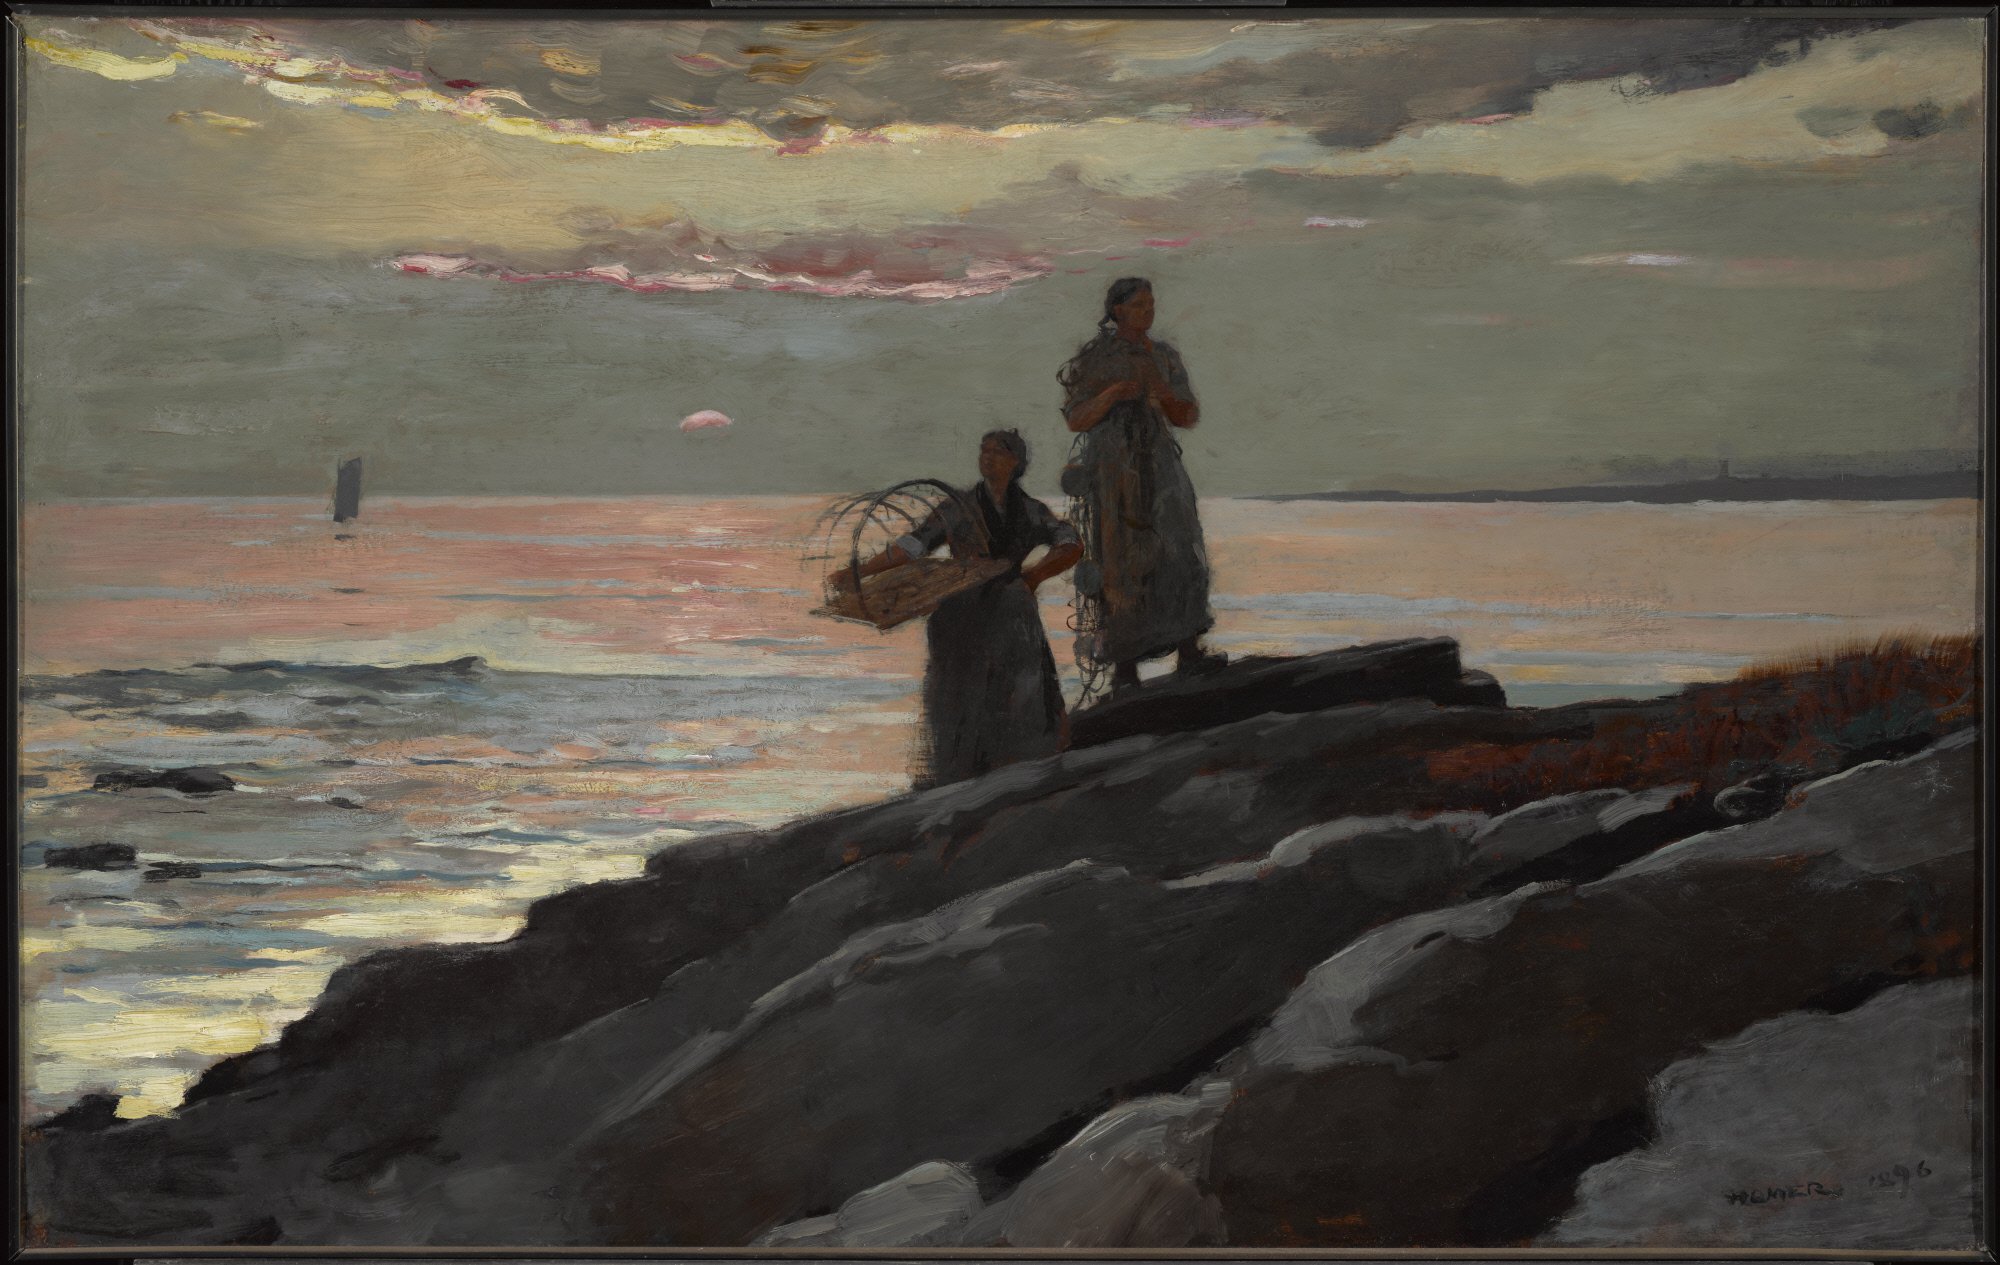 Naplemente, Saco-öböl by Winslow Homer - 1896 - 60,5 x 96,4 cm 